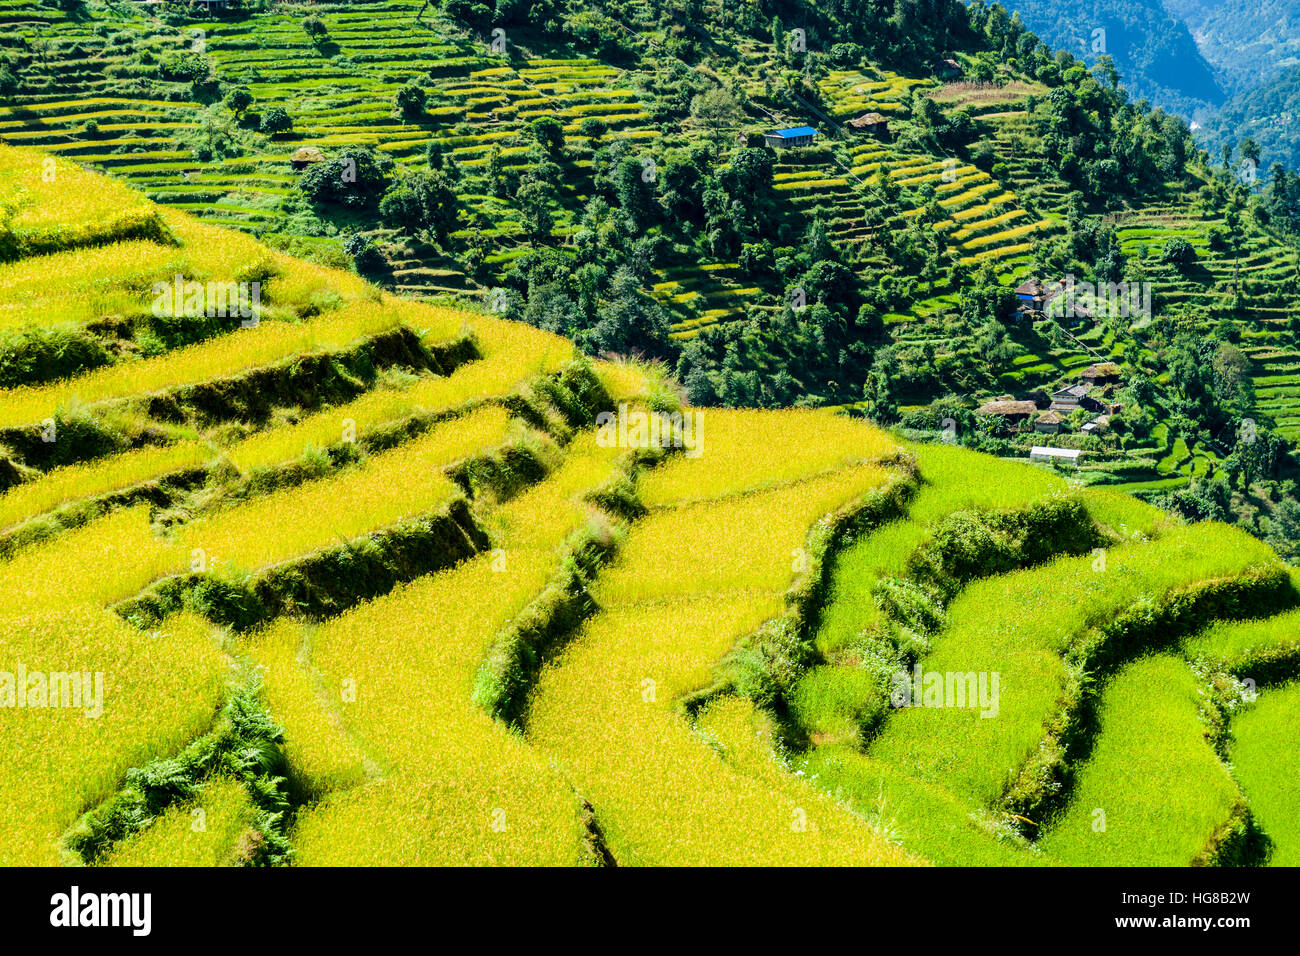 Agricultural landscape, green rice terraces and barley fields in Upper Modi Khola valley, Landruk, Kaski District, Nepal Stock Photo